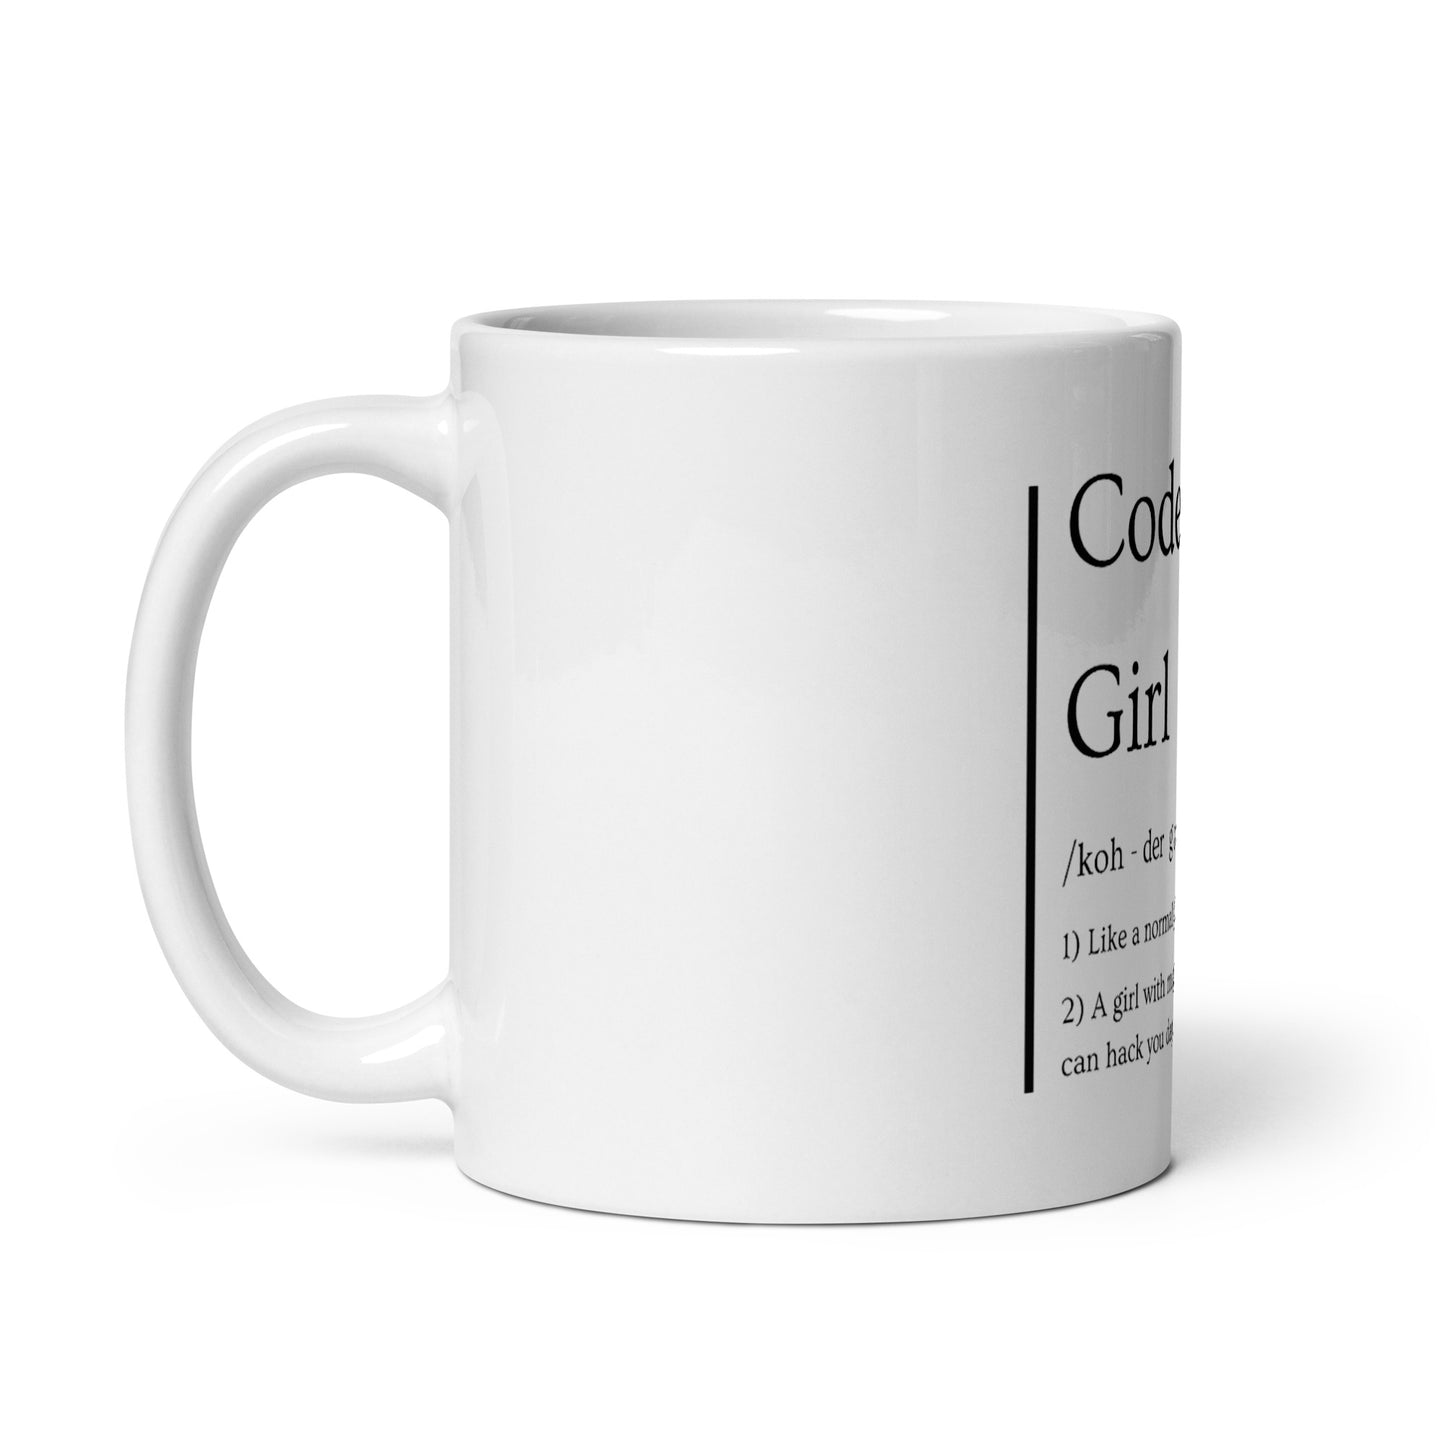 Coder Girl glossy mug